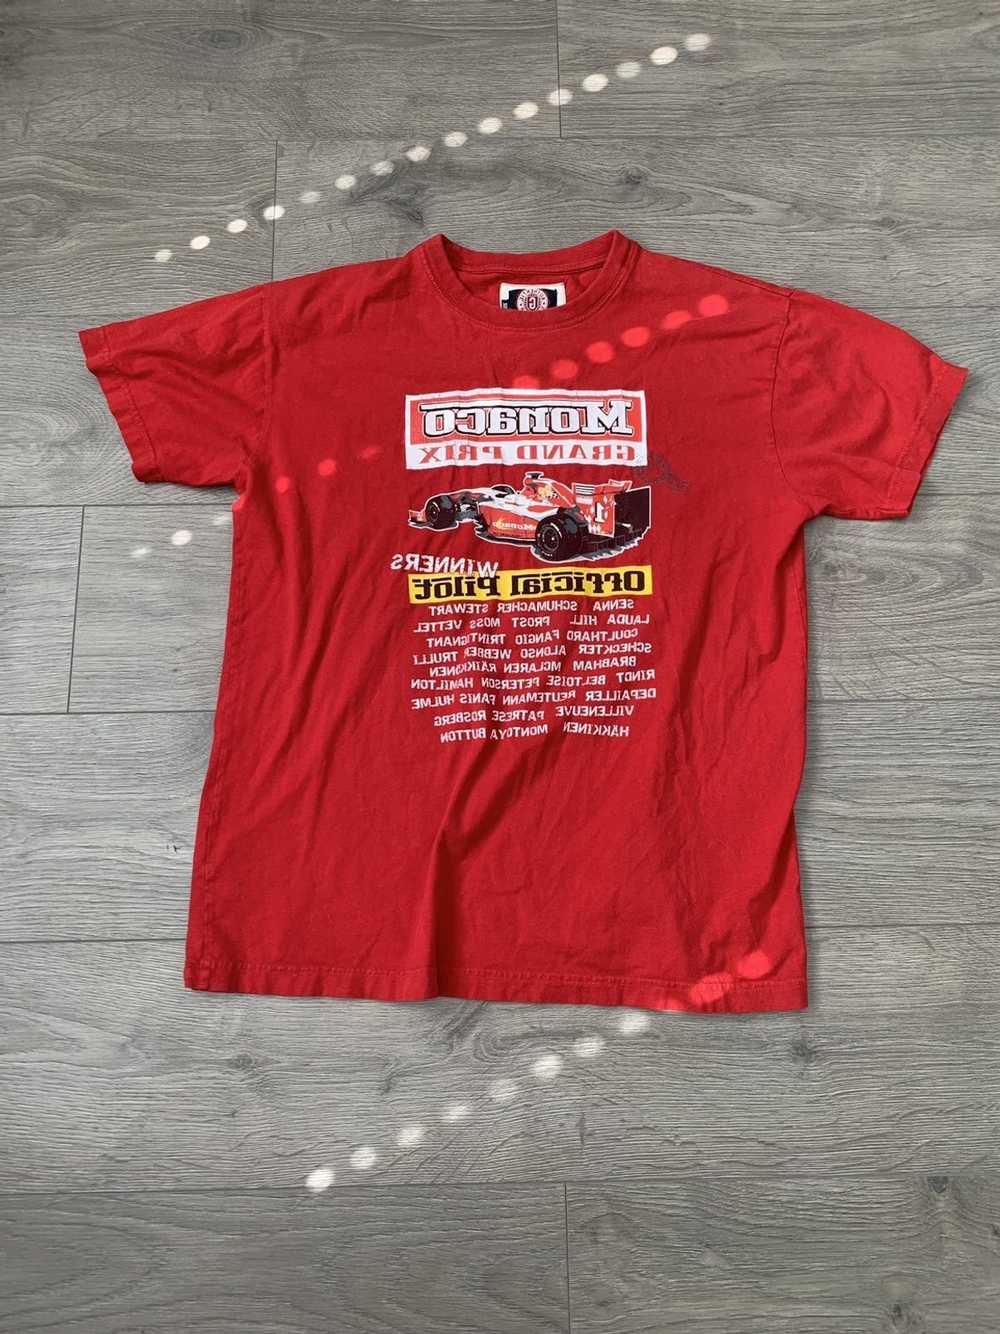 Racing Monaco Grand Prix shirt - image 2